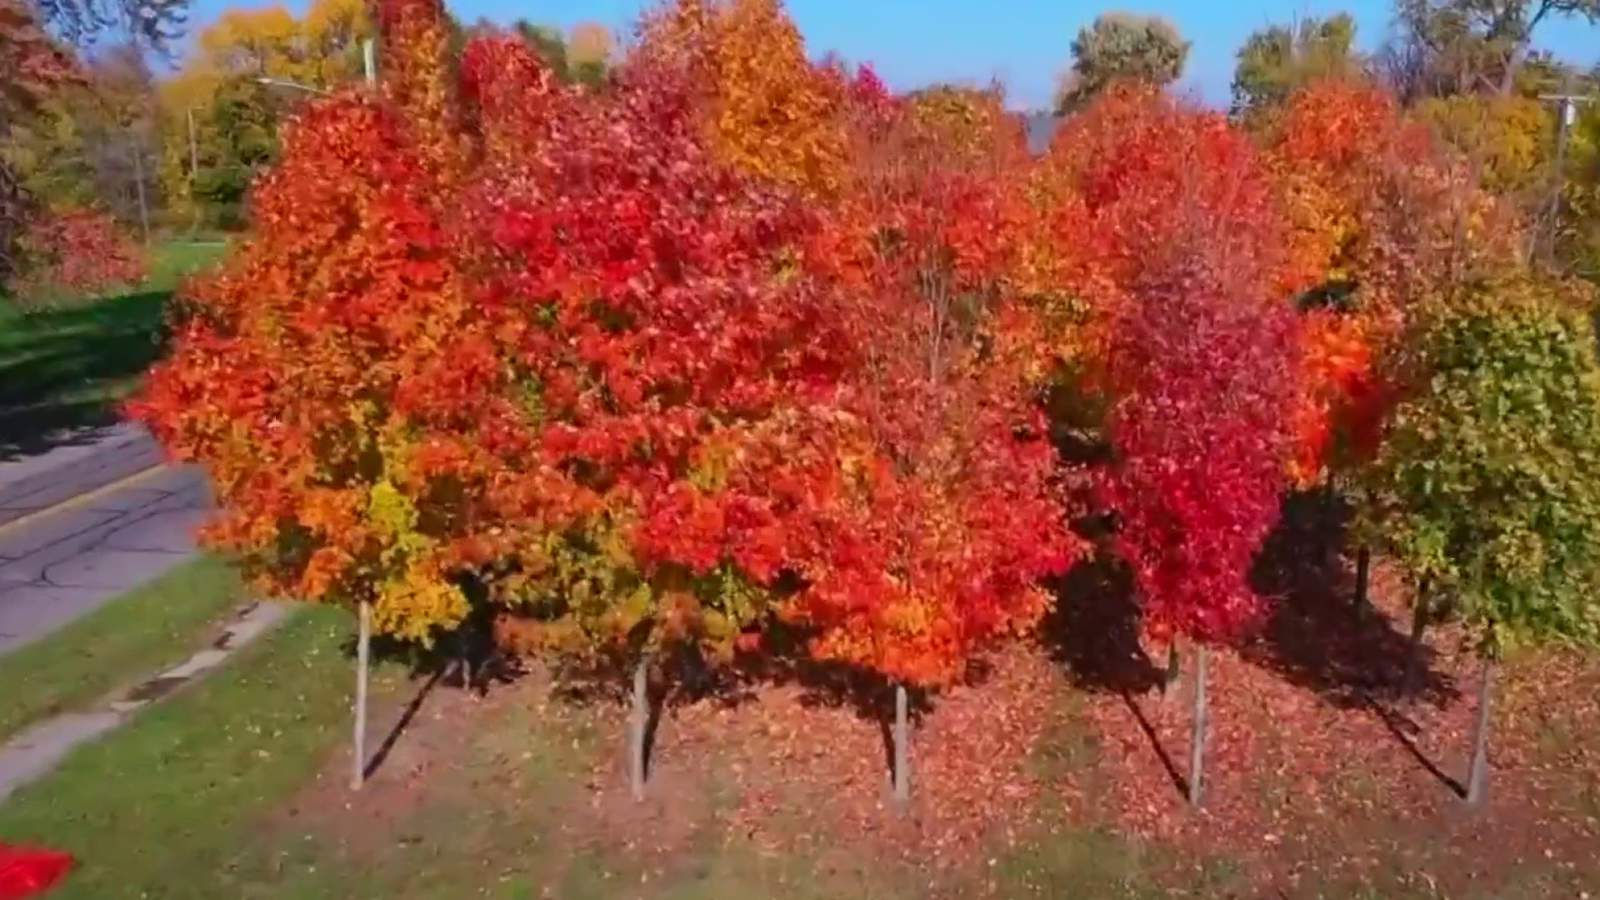 VIDEO: Fall colors hit their peak in Southeast Michigan